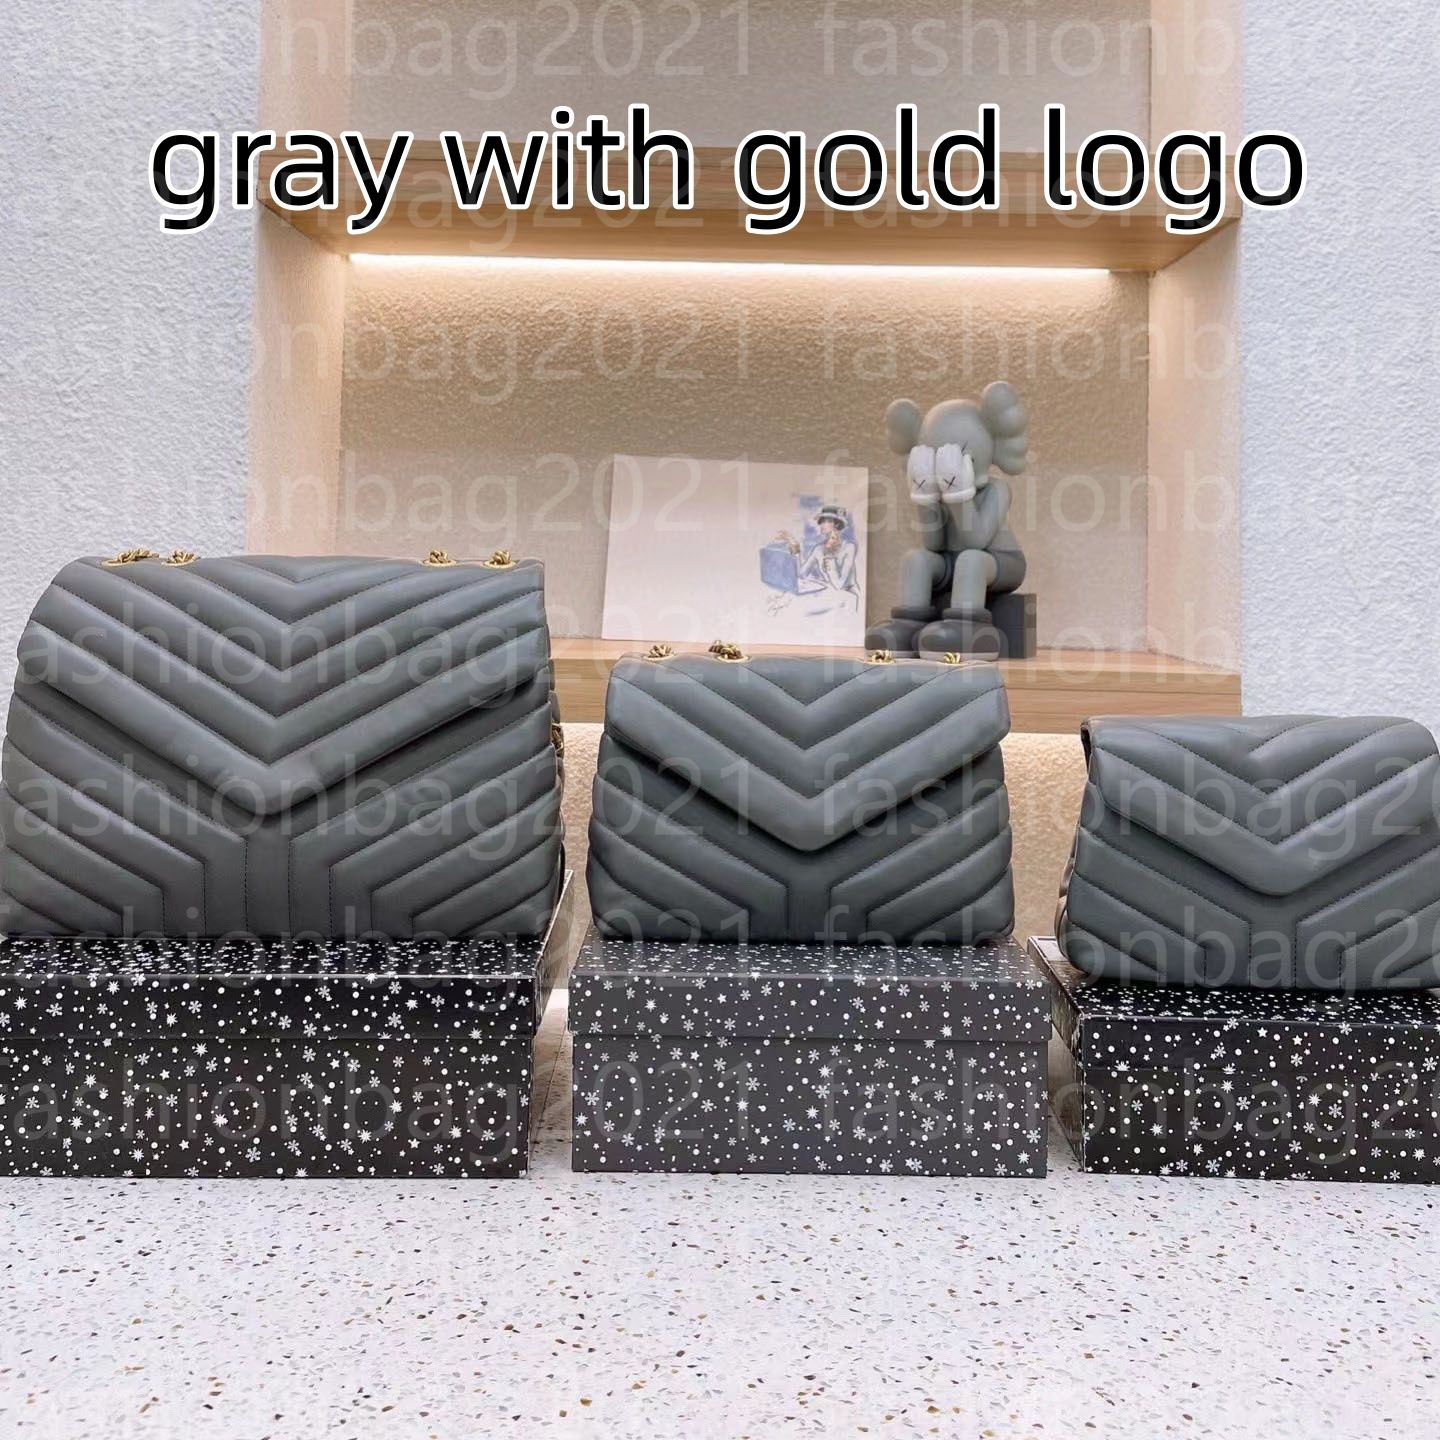 gray_gold logo